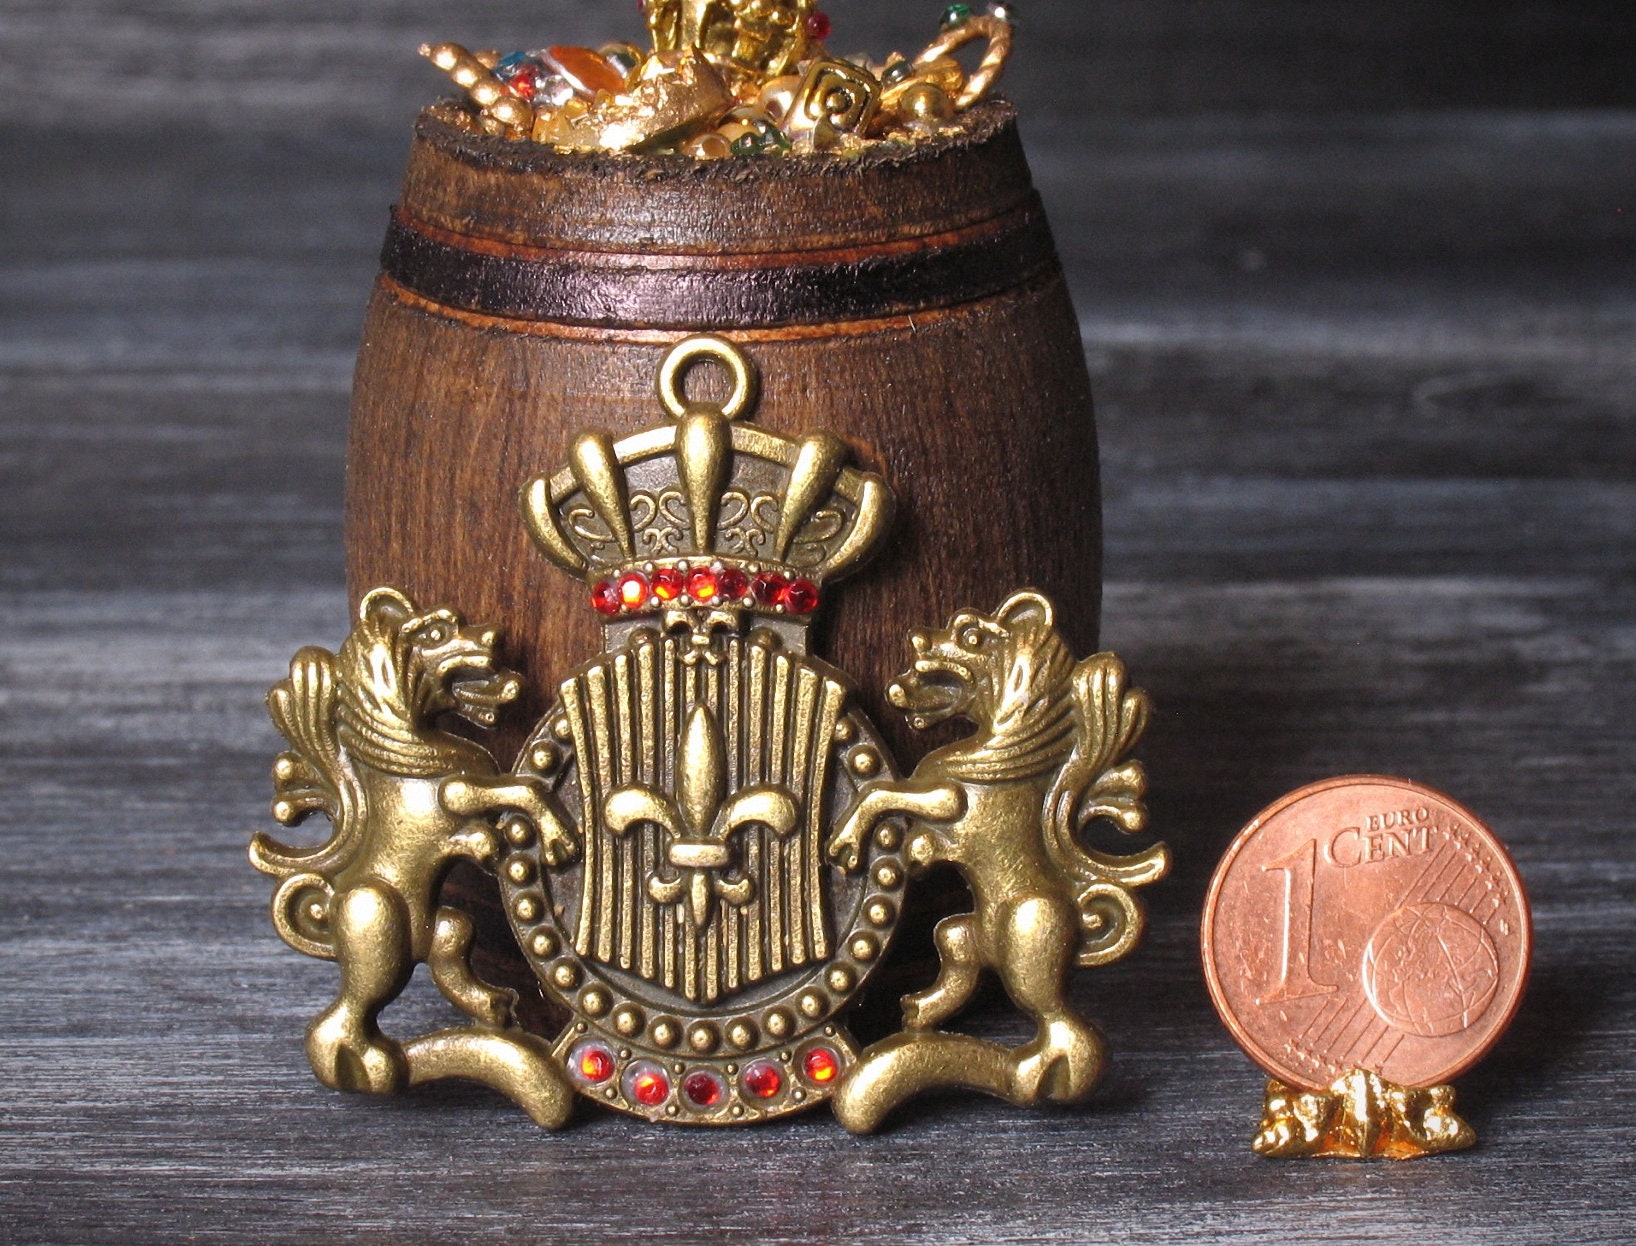 Miniature Dollhouse Bottle of Royal Cresus 